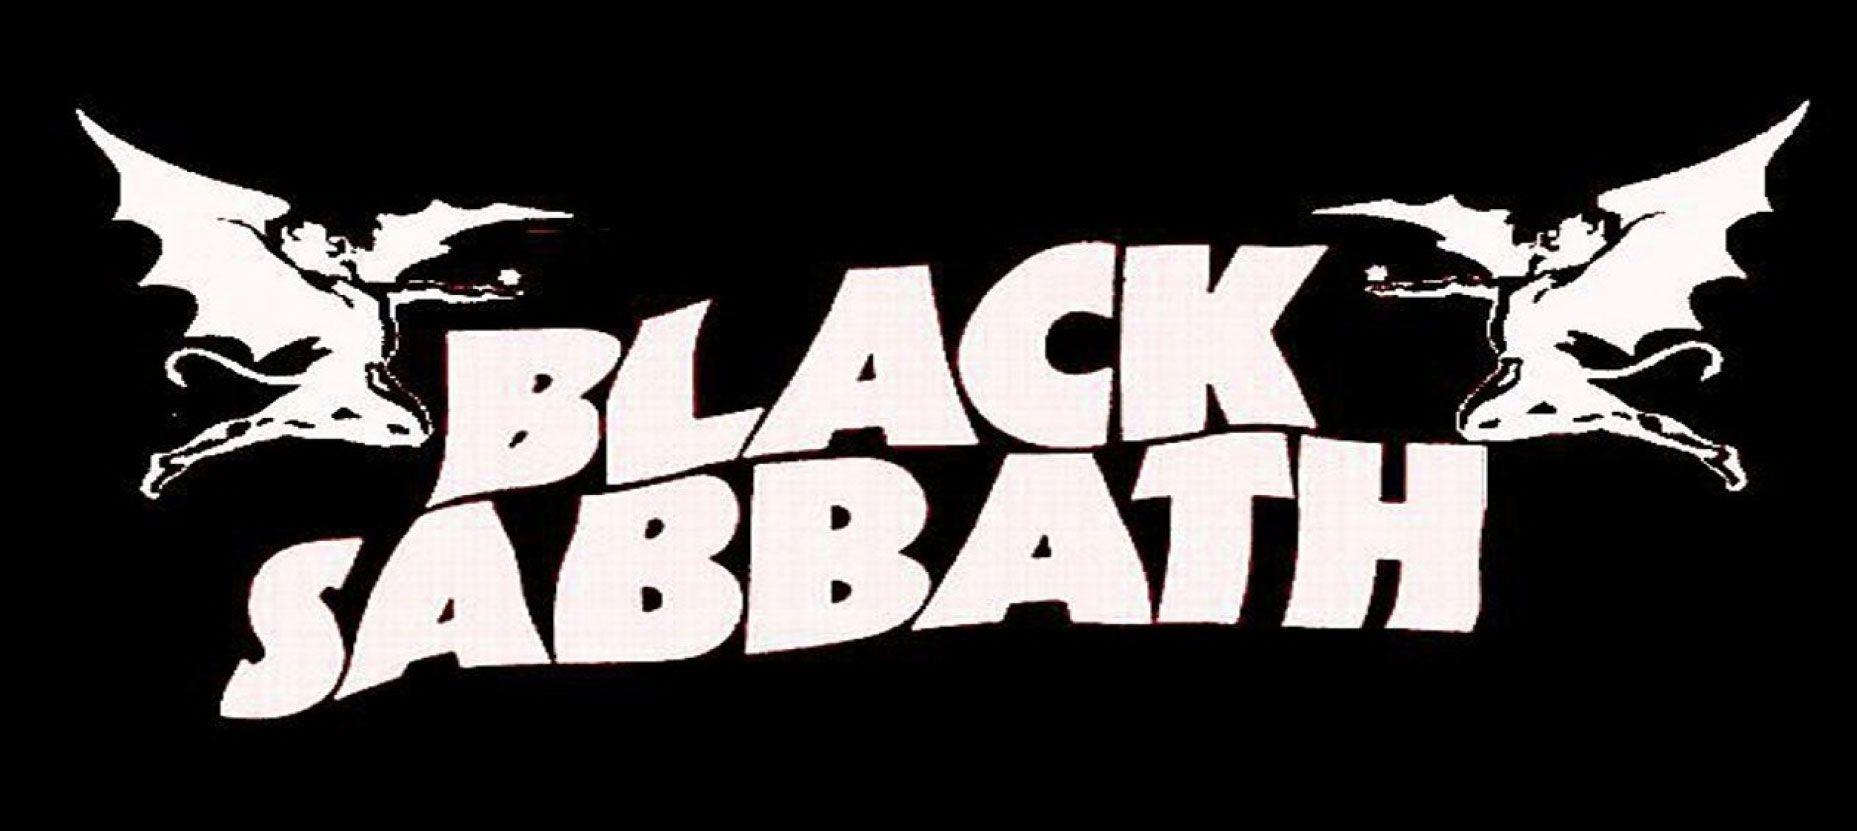 black sabbath demon logo